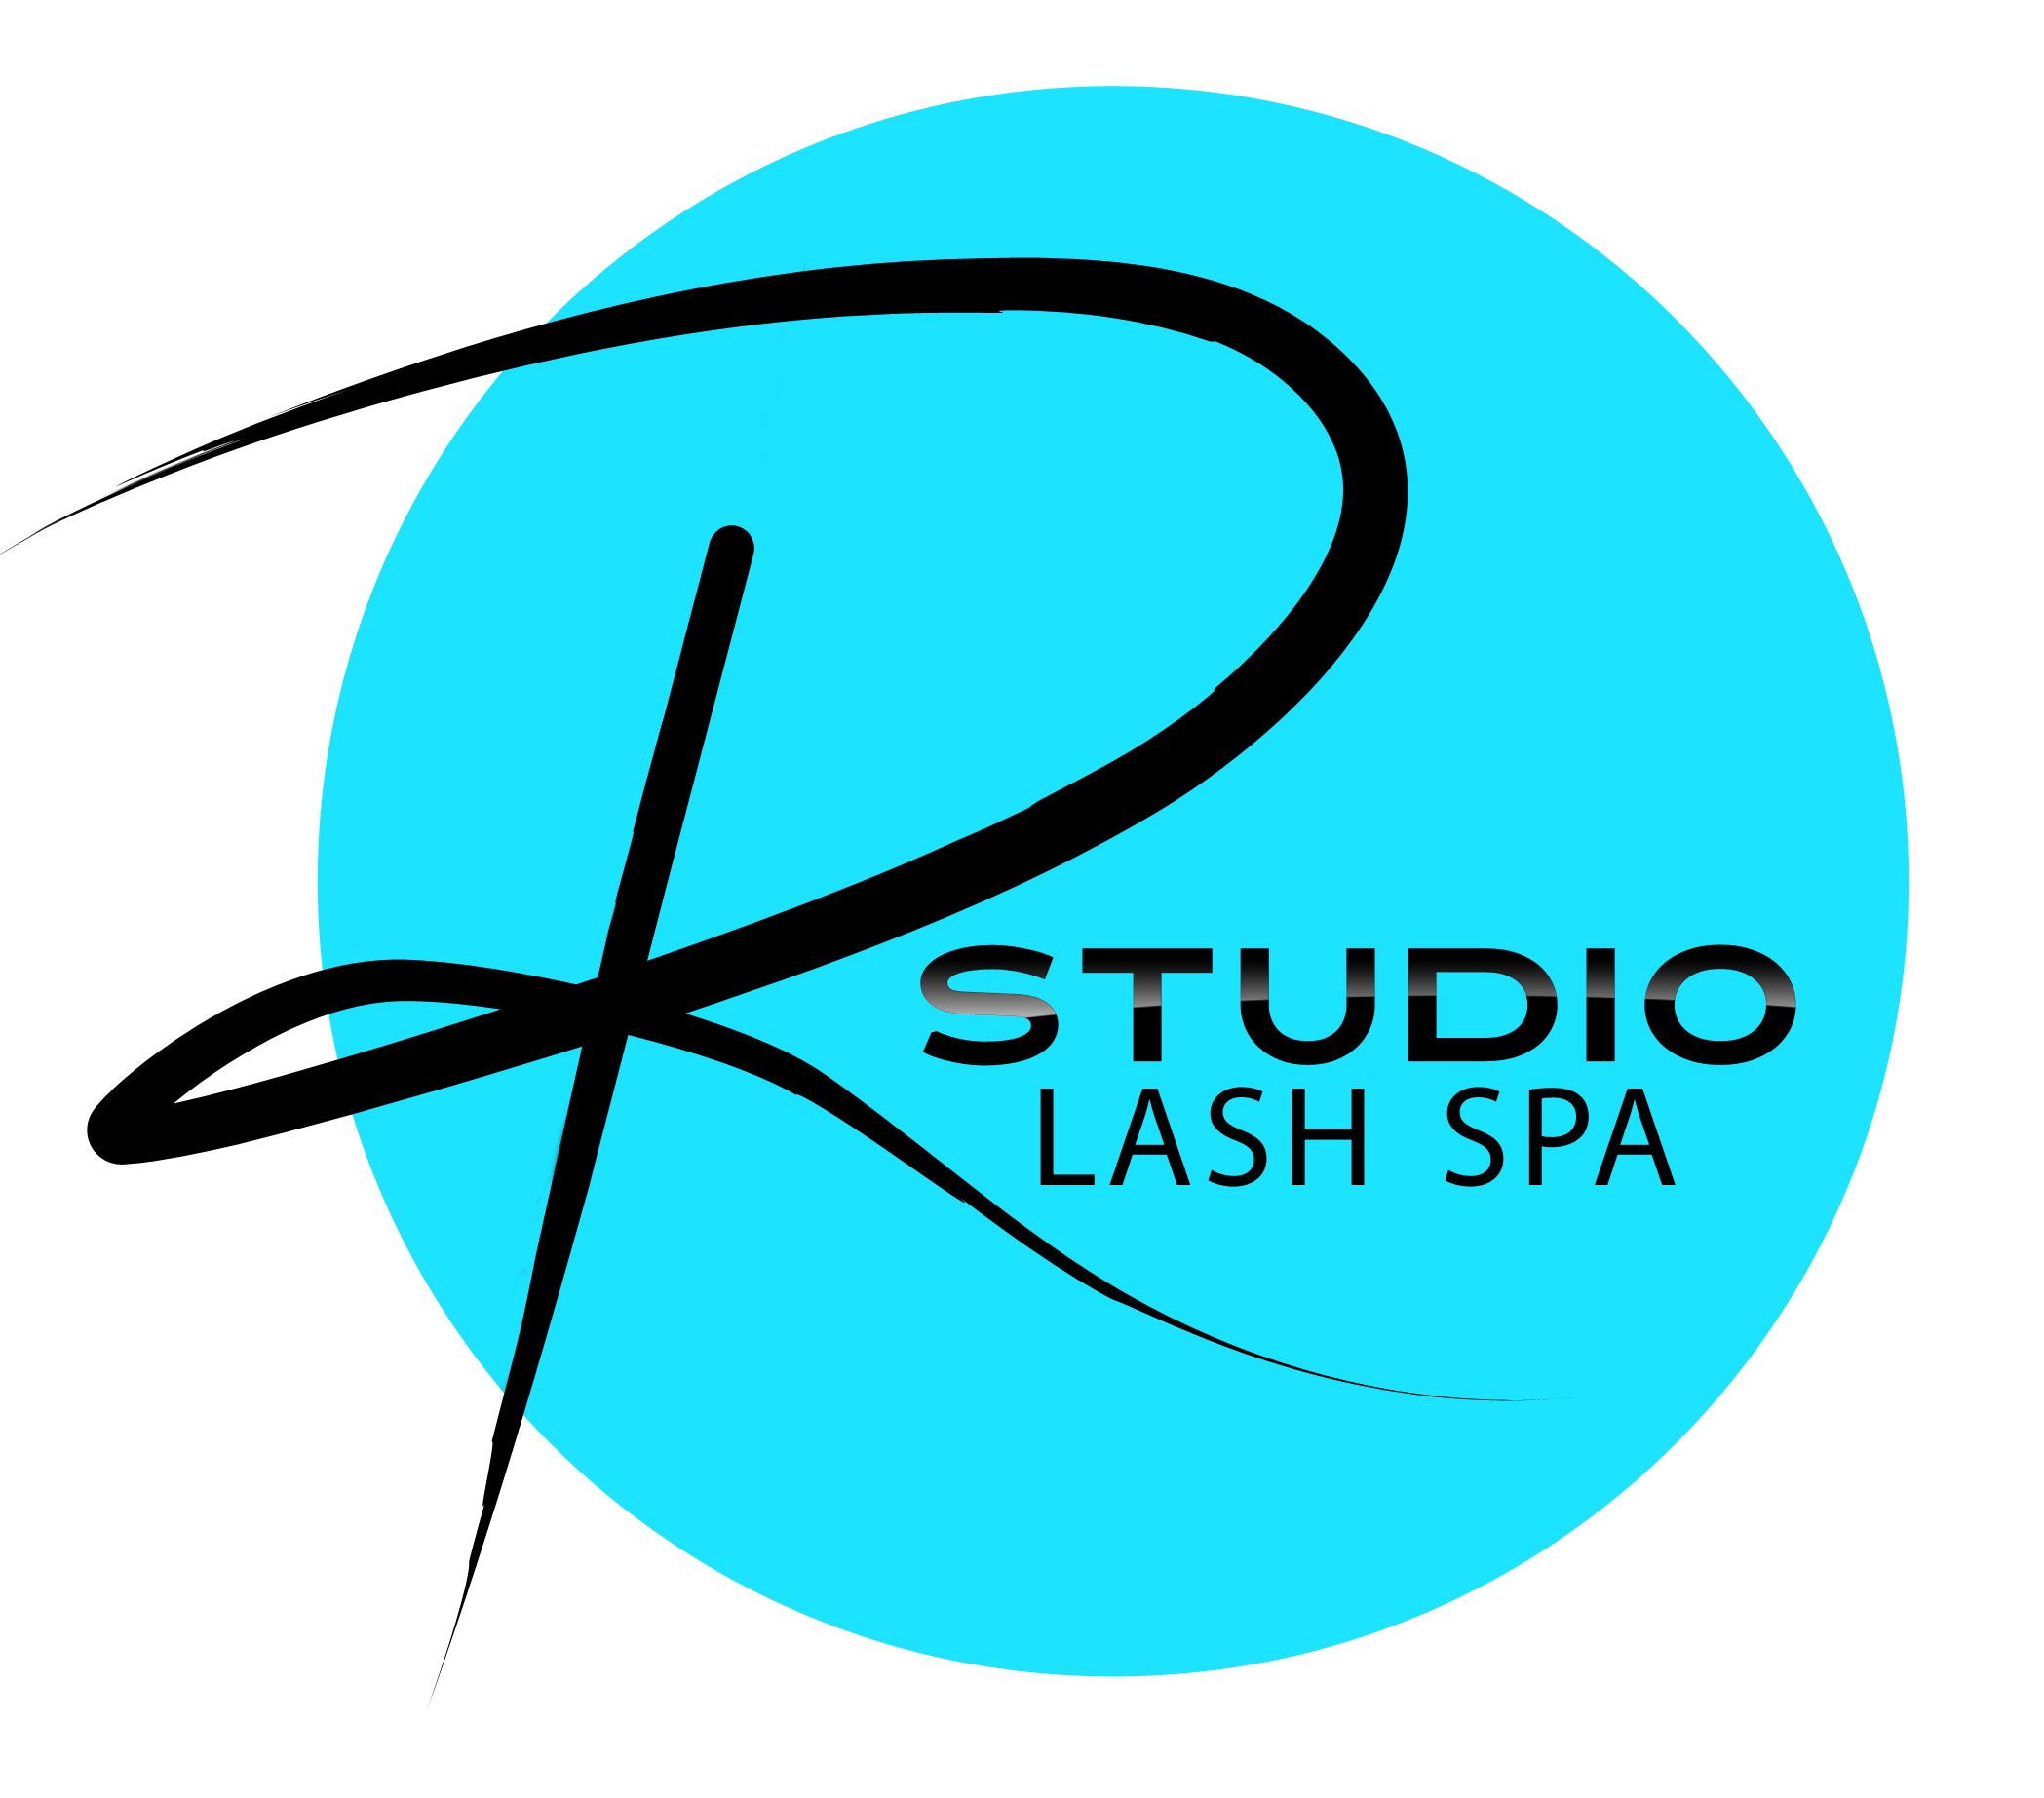 Hand Drawn Logo Design for R Studio Lash Spa by Remeoner